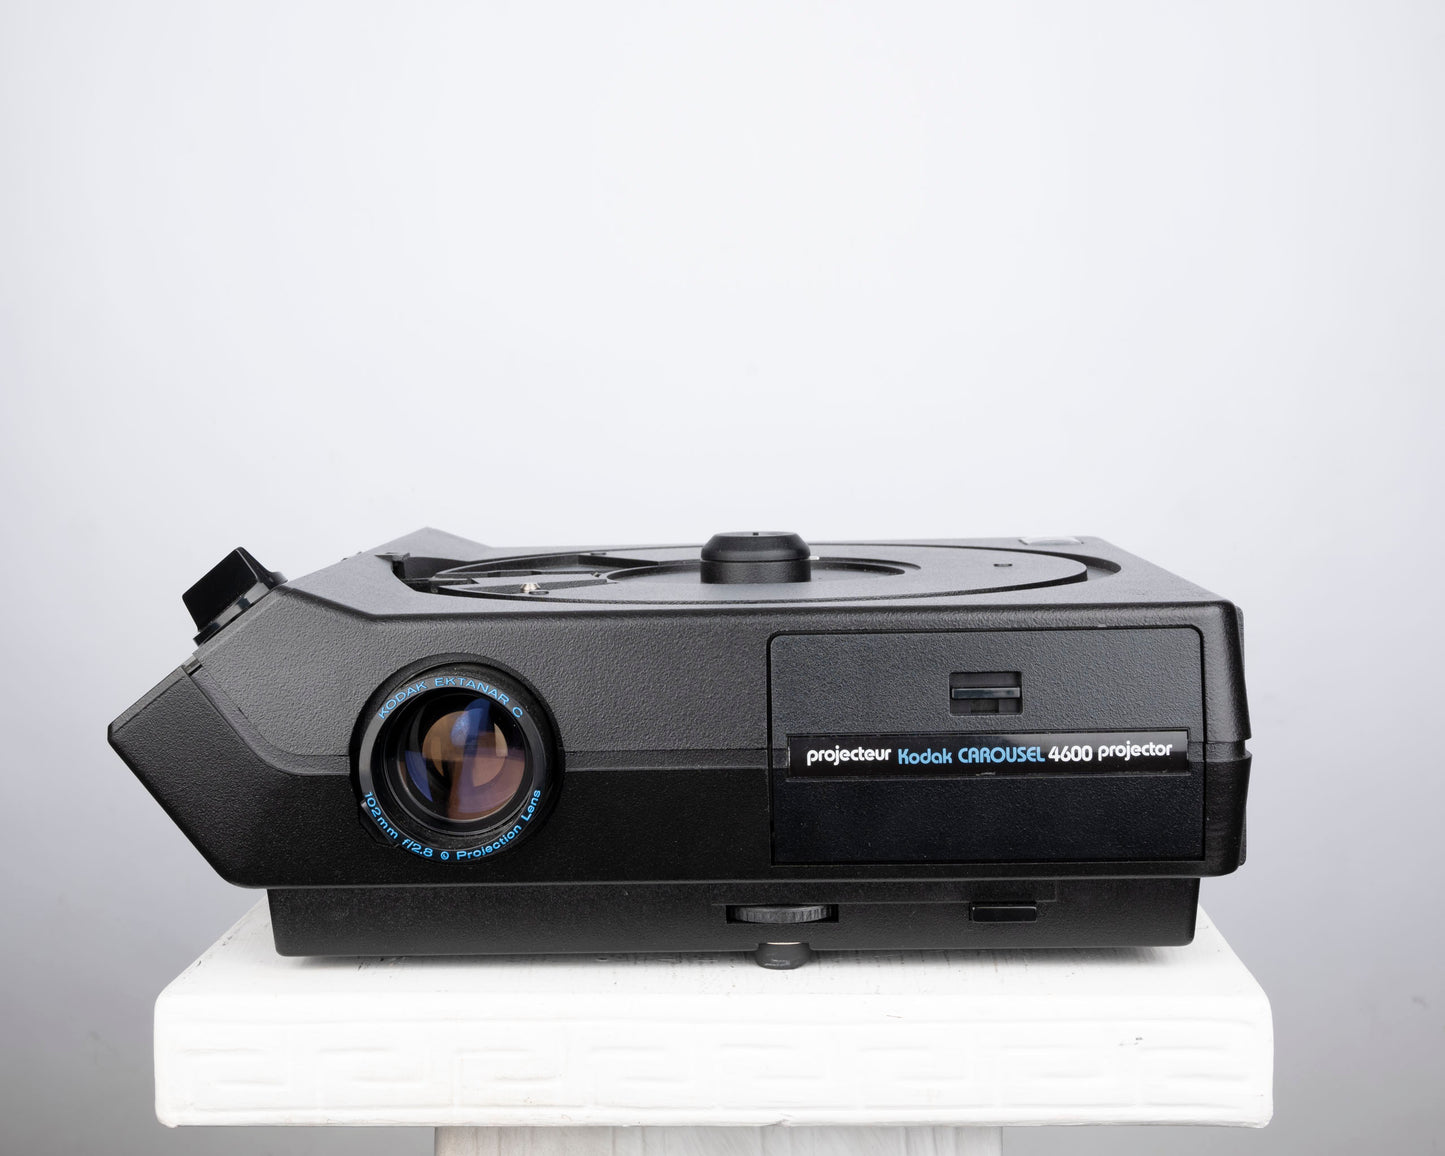 Kodak Carousel 4600 35mm slide projector w/ Ektanar C 102mm f2.8 lens (155965)